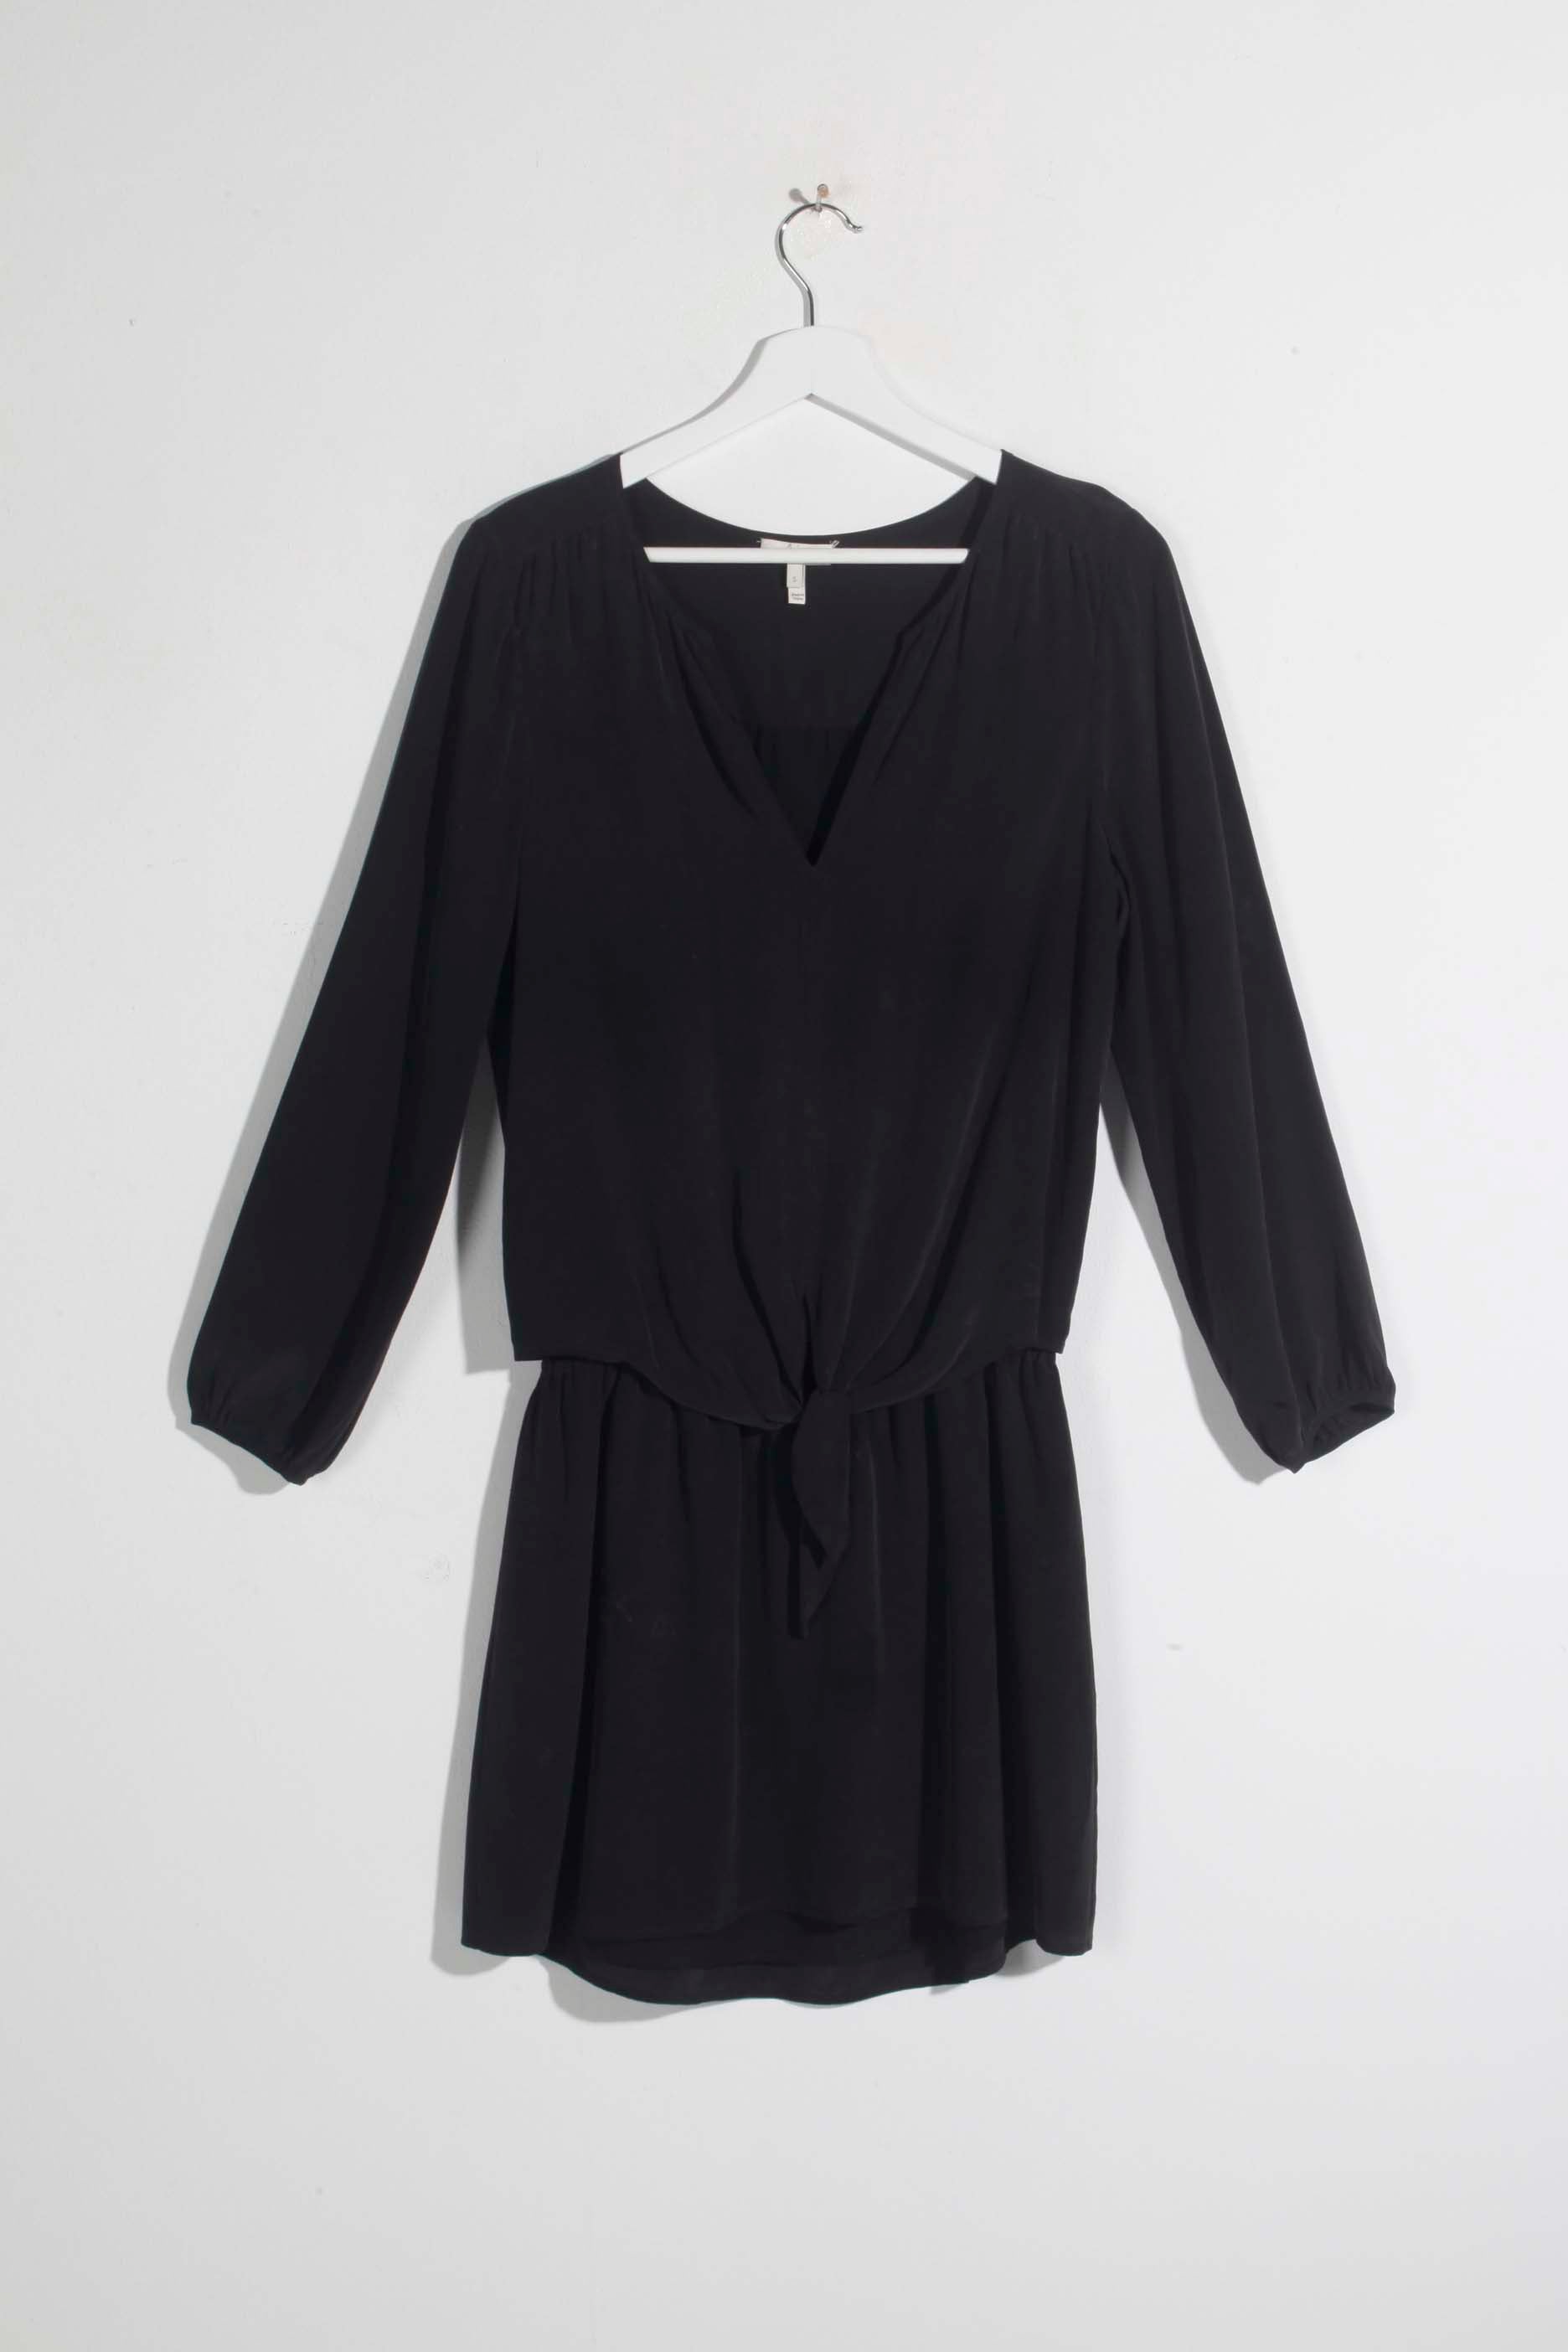 Joie Black Silk Dress with Knot Waist (EU38/UK10)